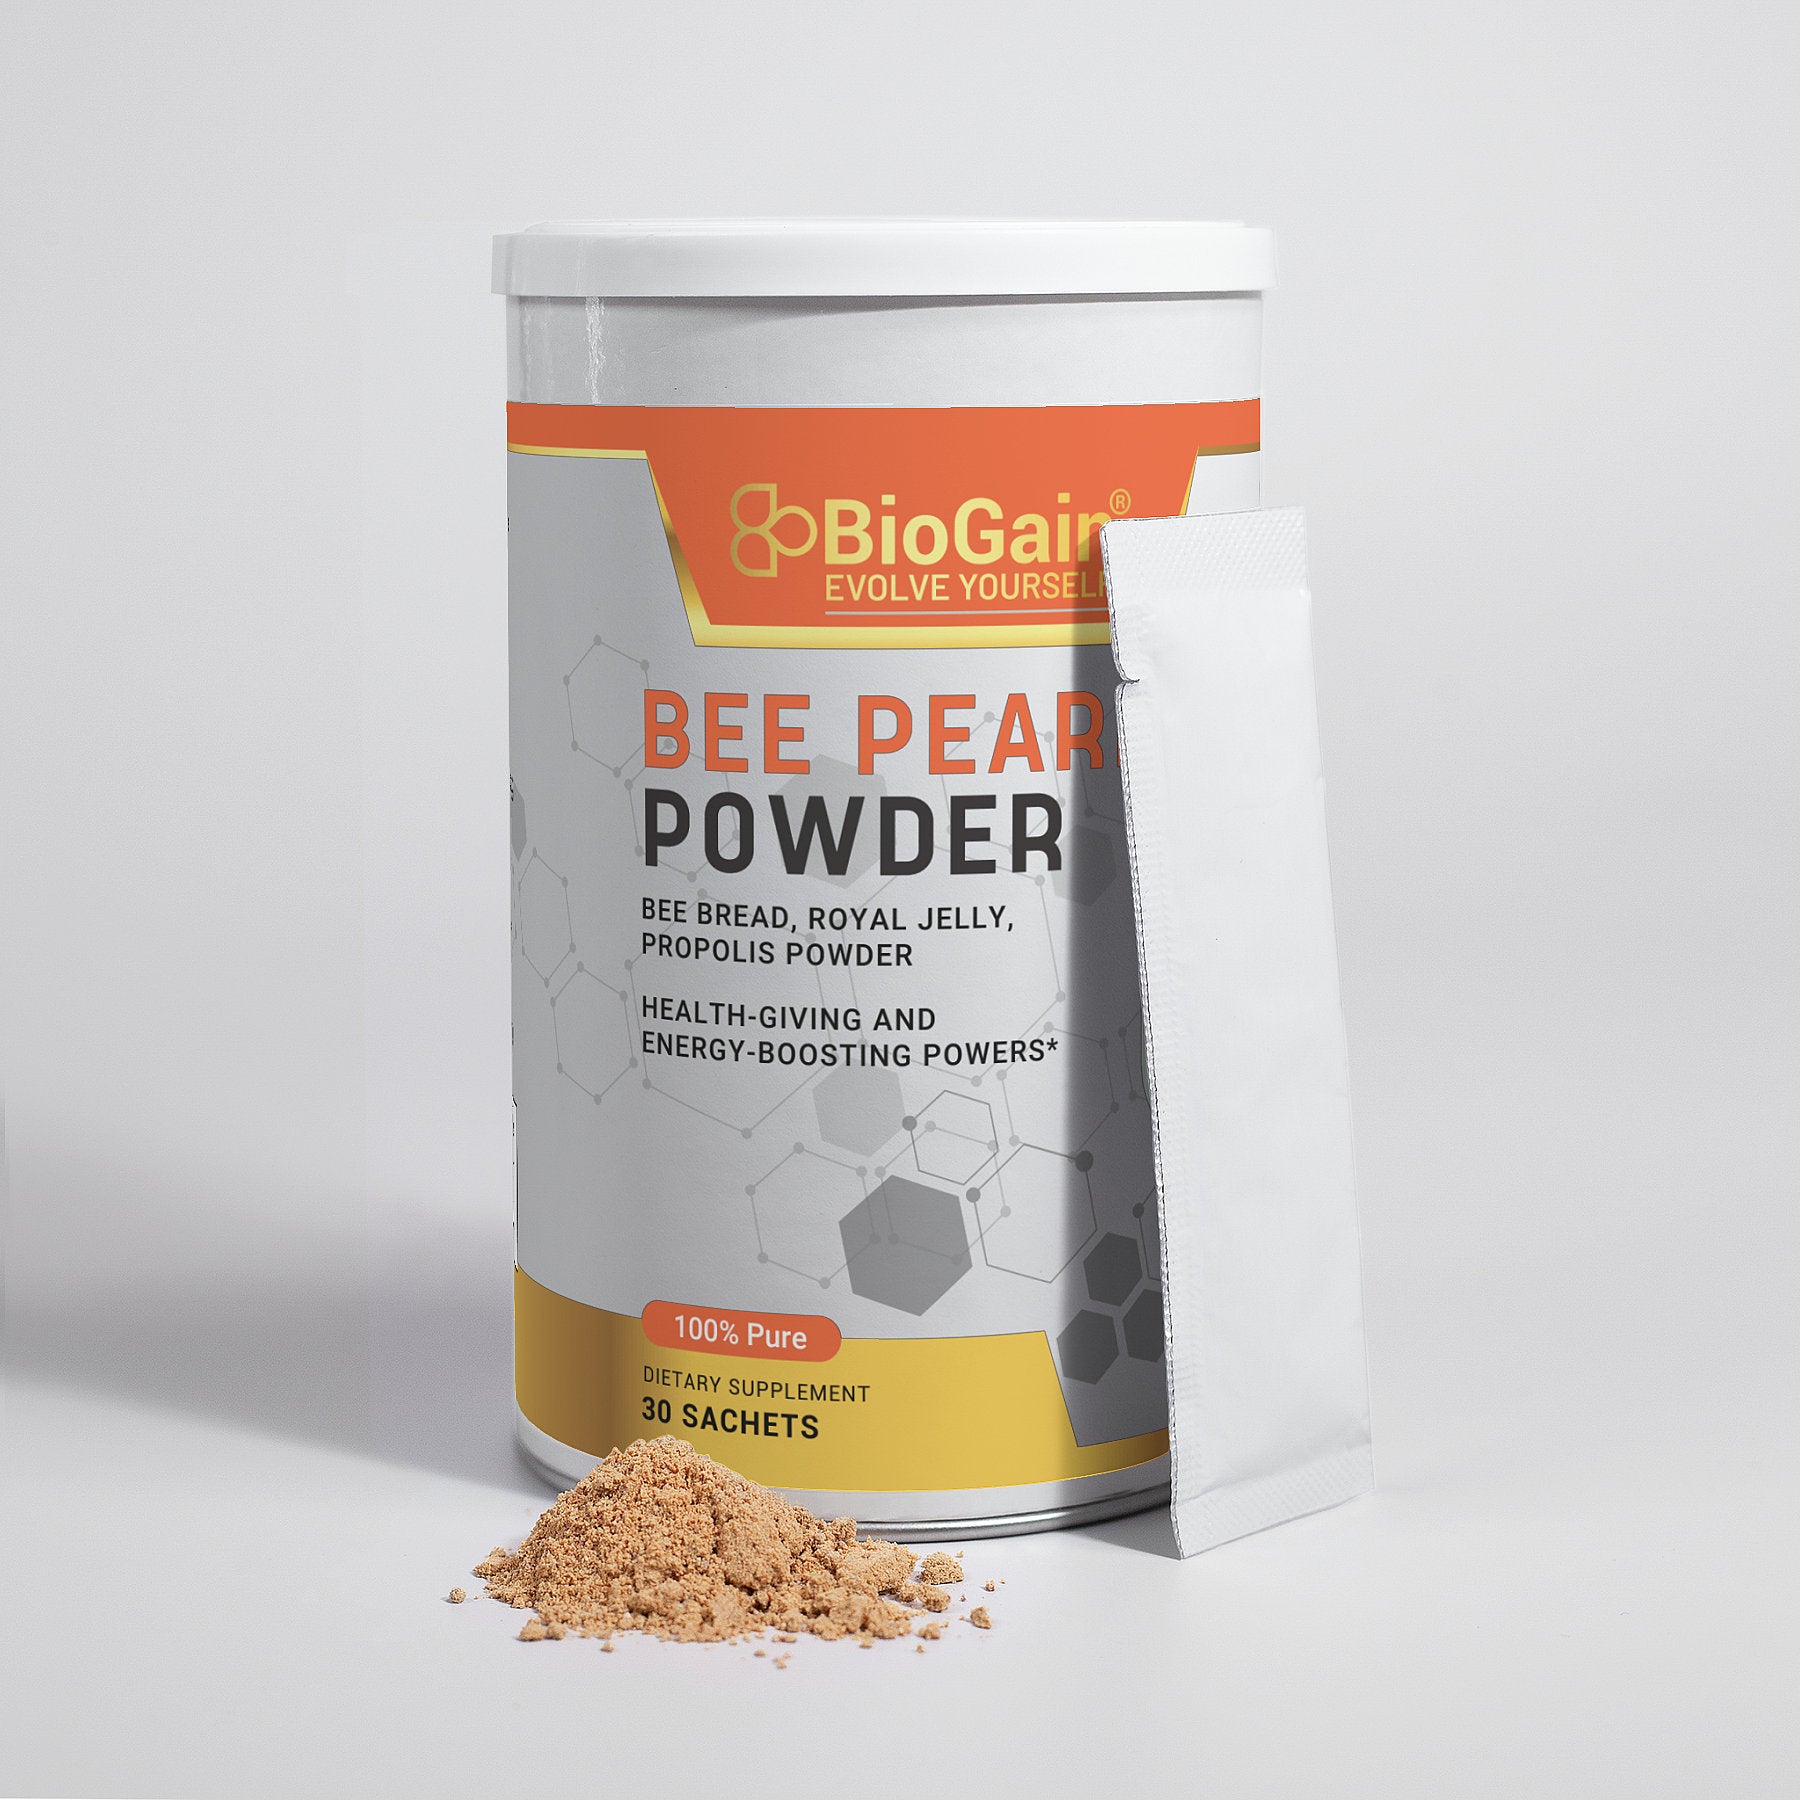 BioGain® Bee Pearl Powder